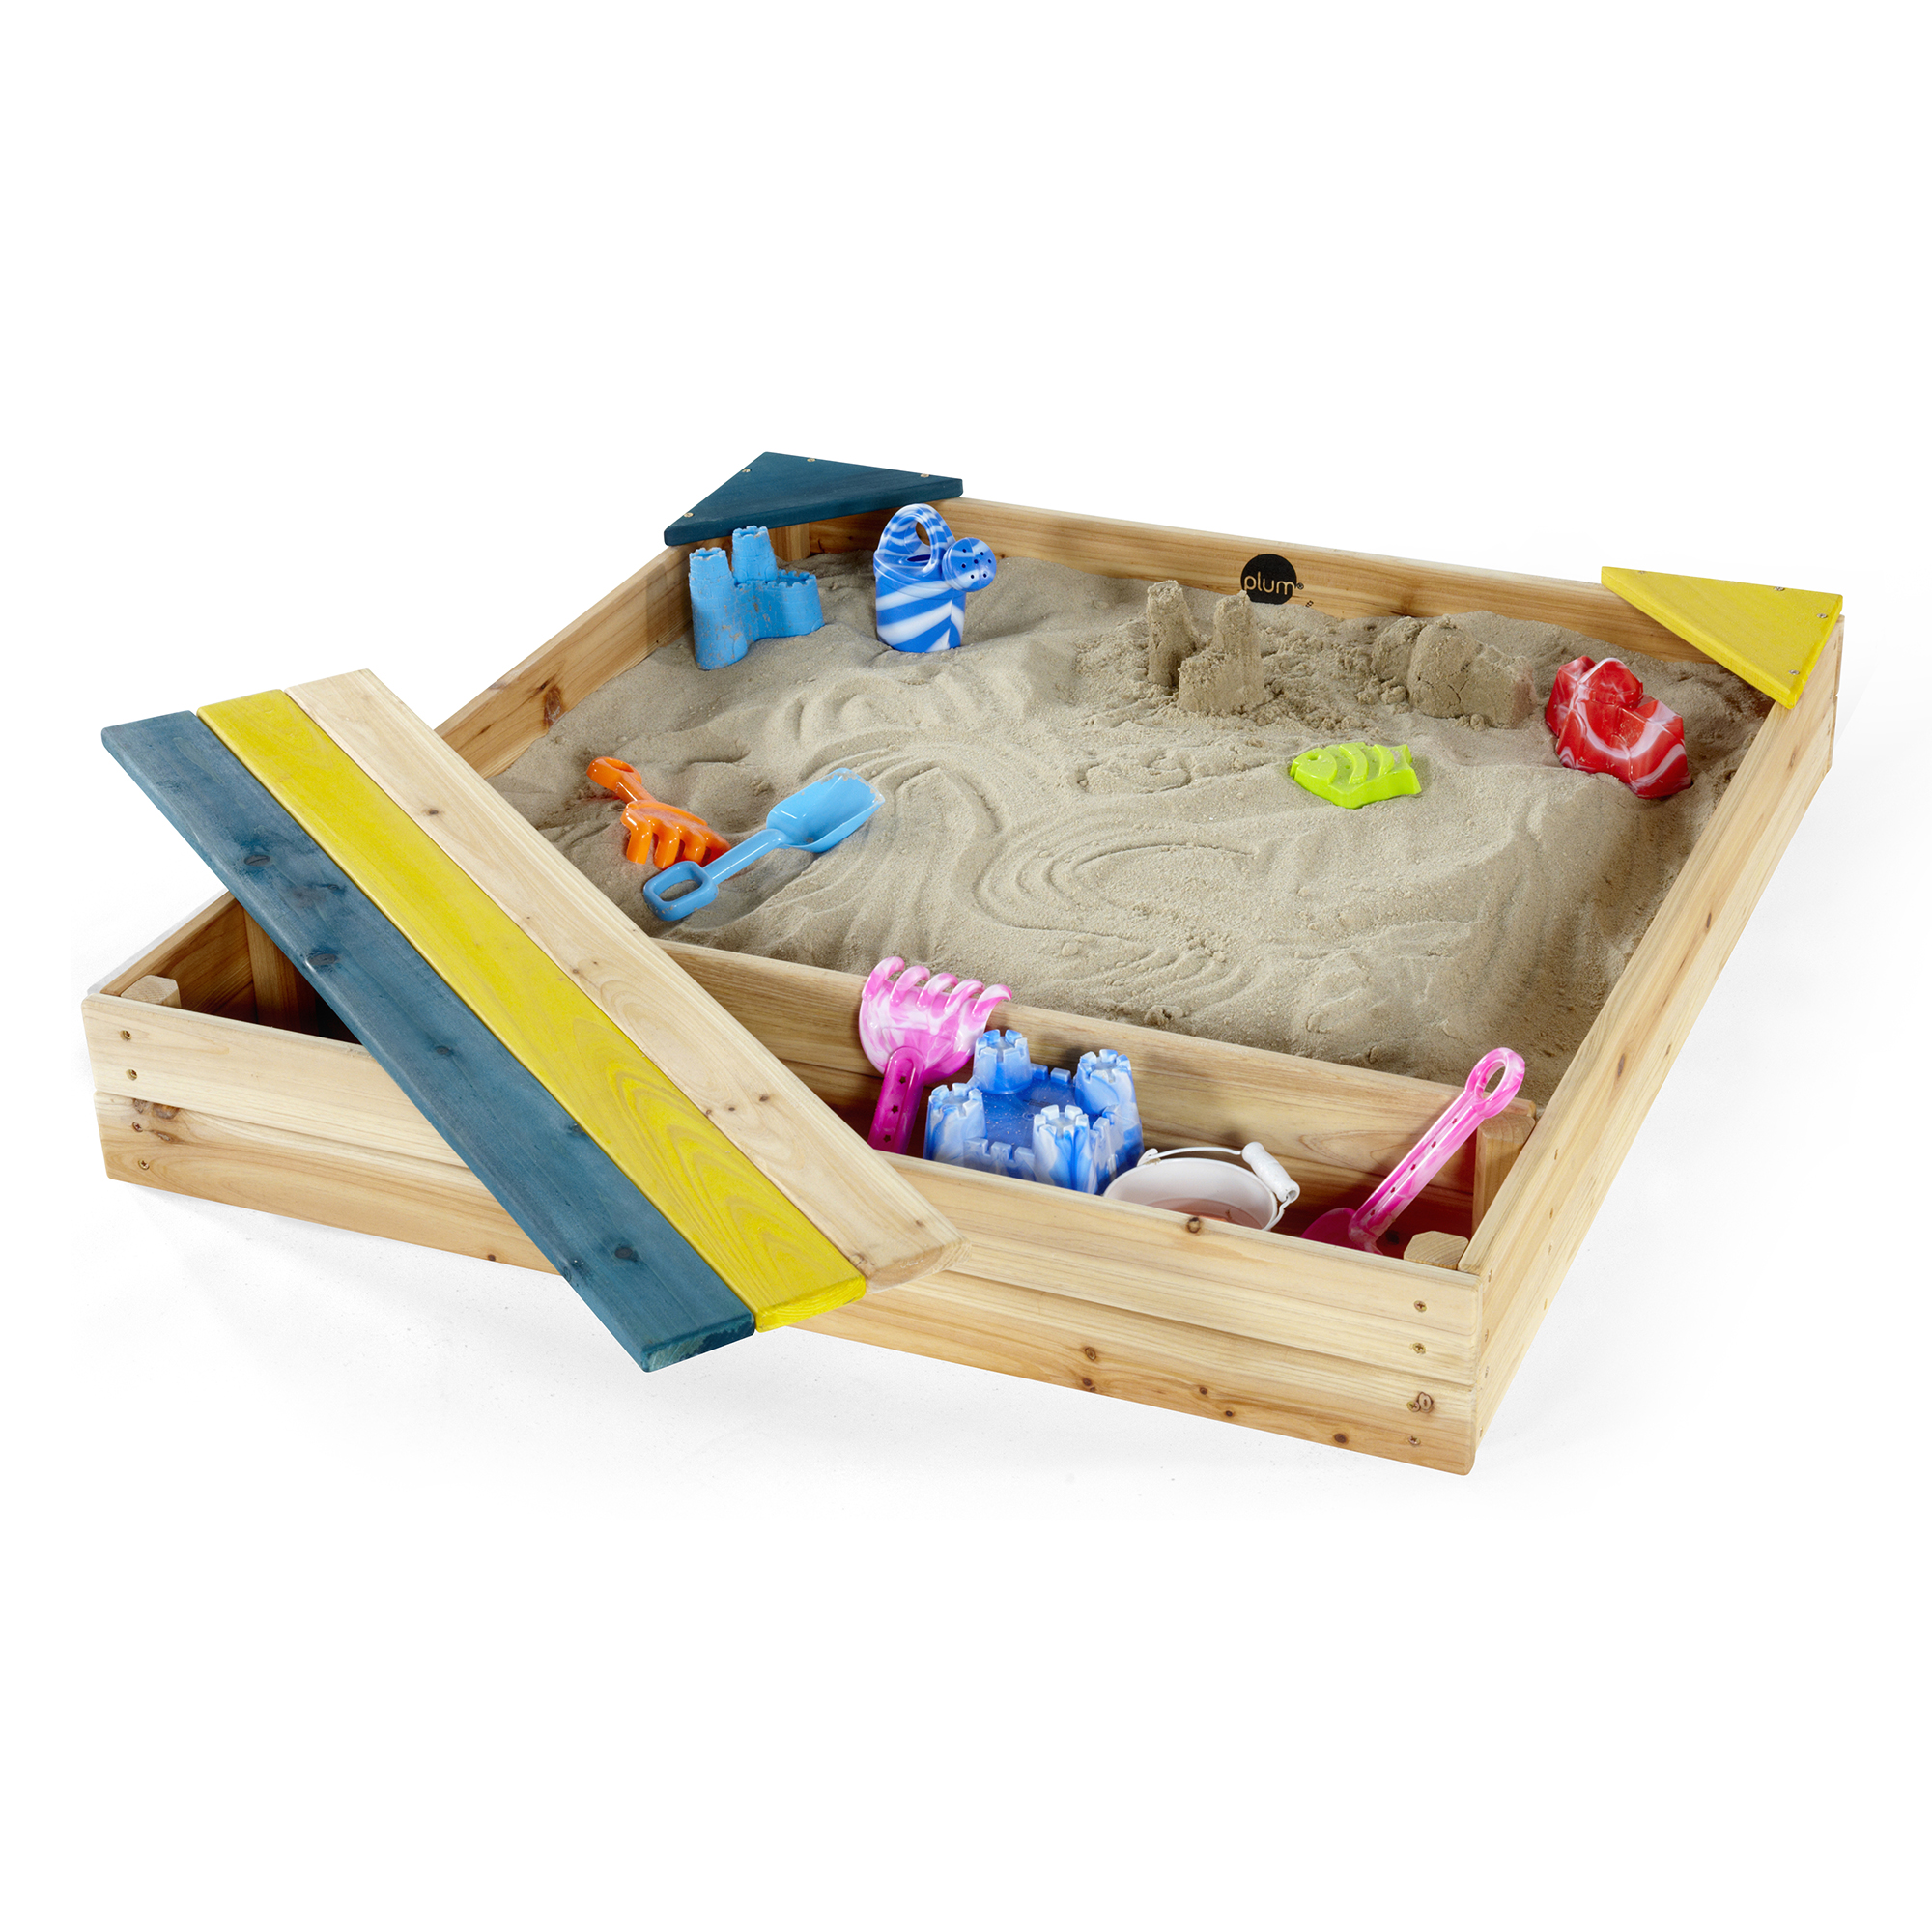 Plum Play Store-it Wooden Sandbox - image 2 of 9